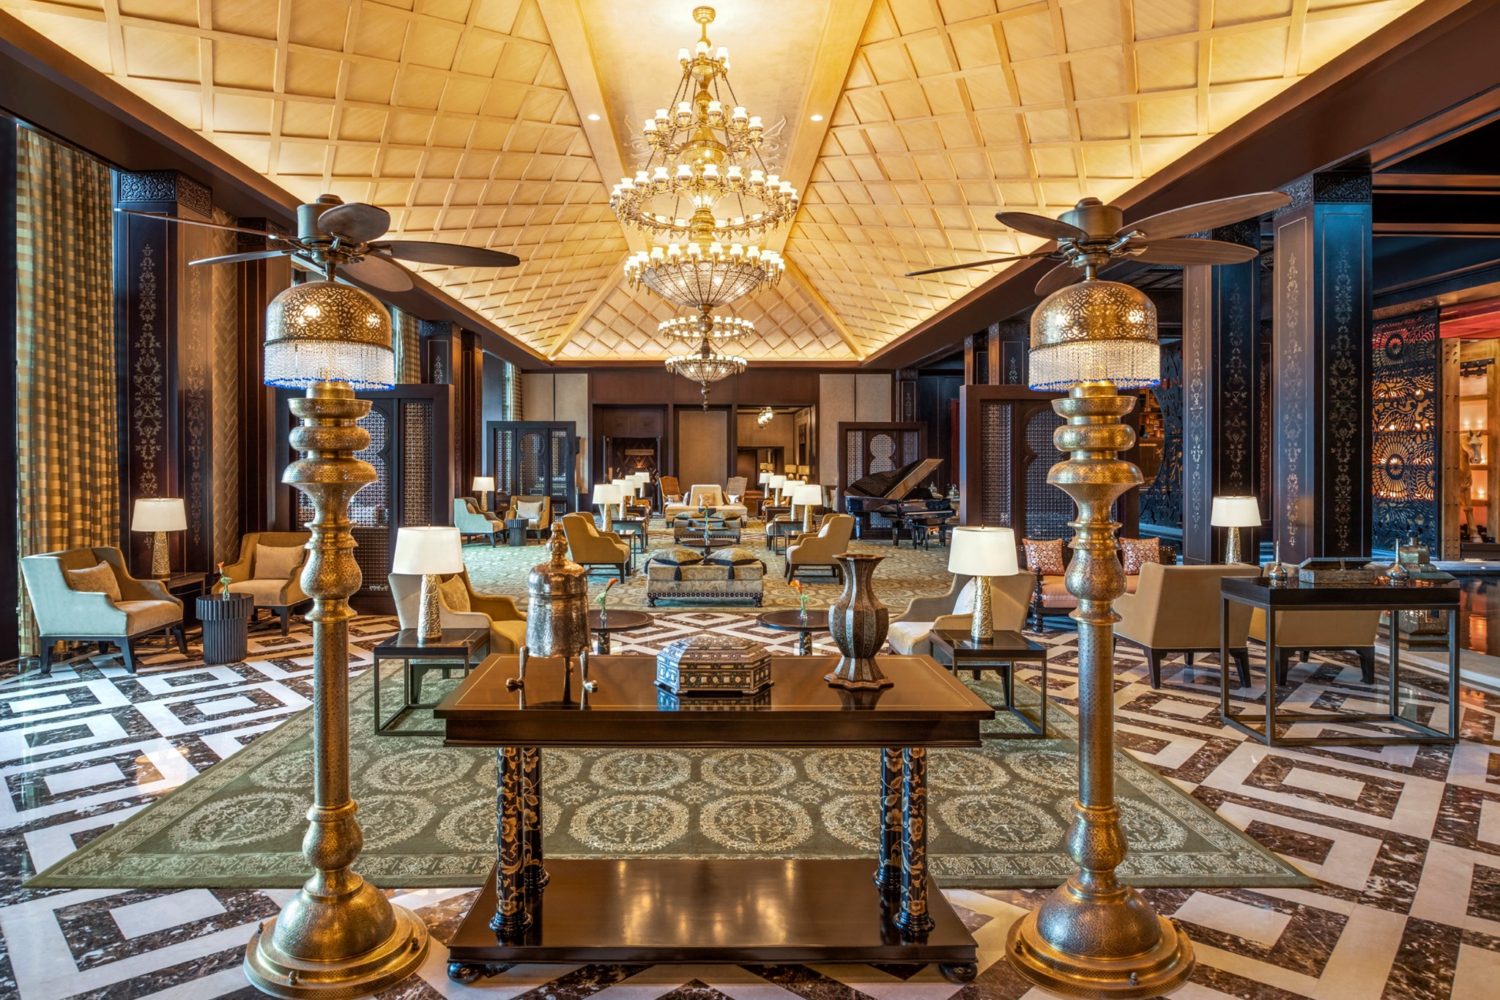 The Lobby of St. Regis Hotel